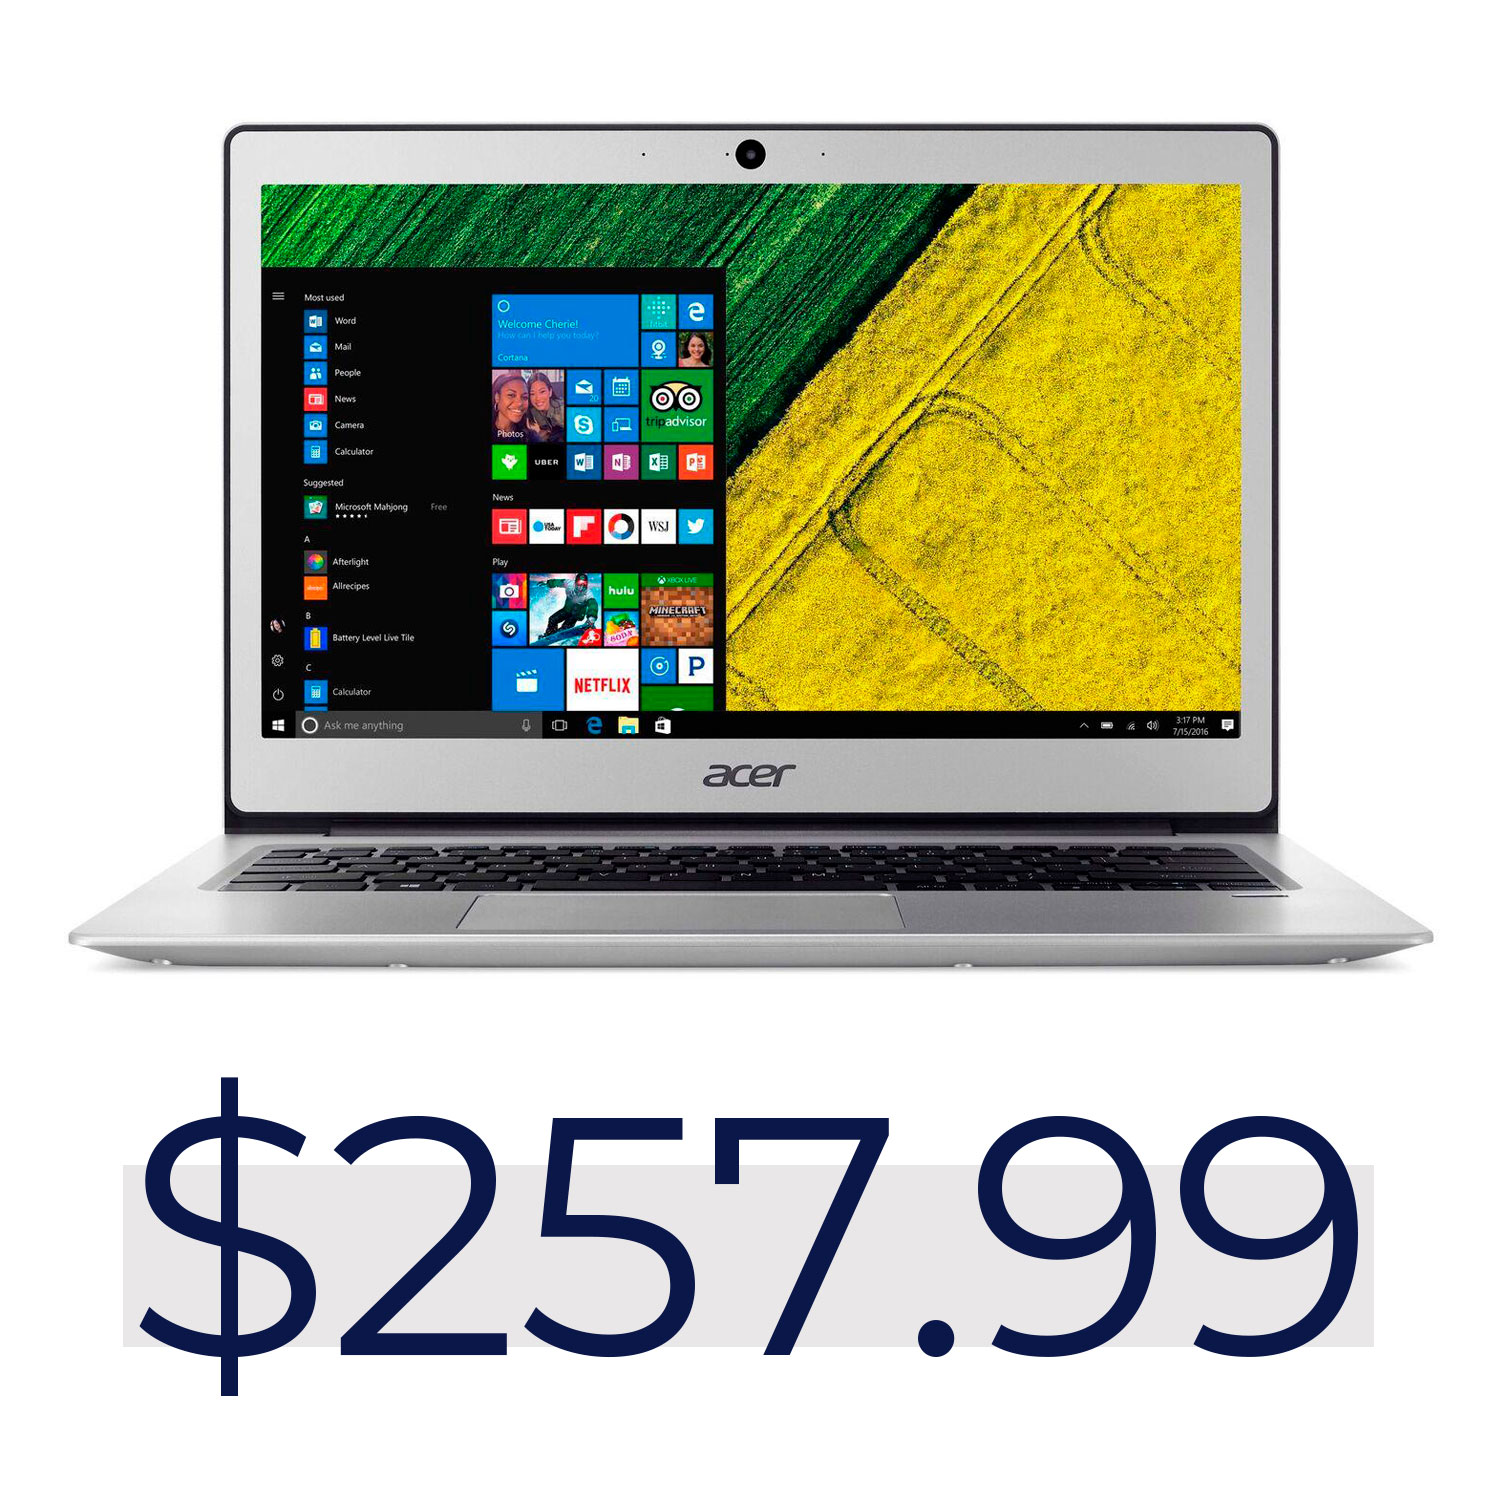 mejores laptops baratas